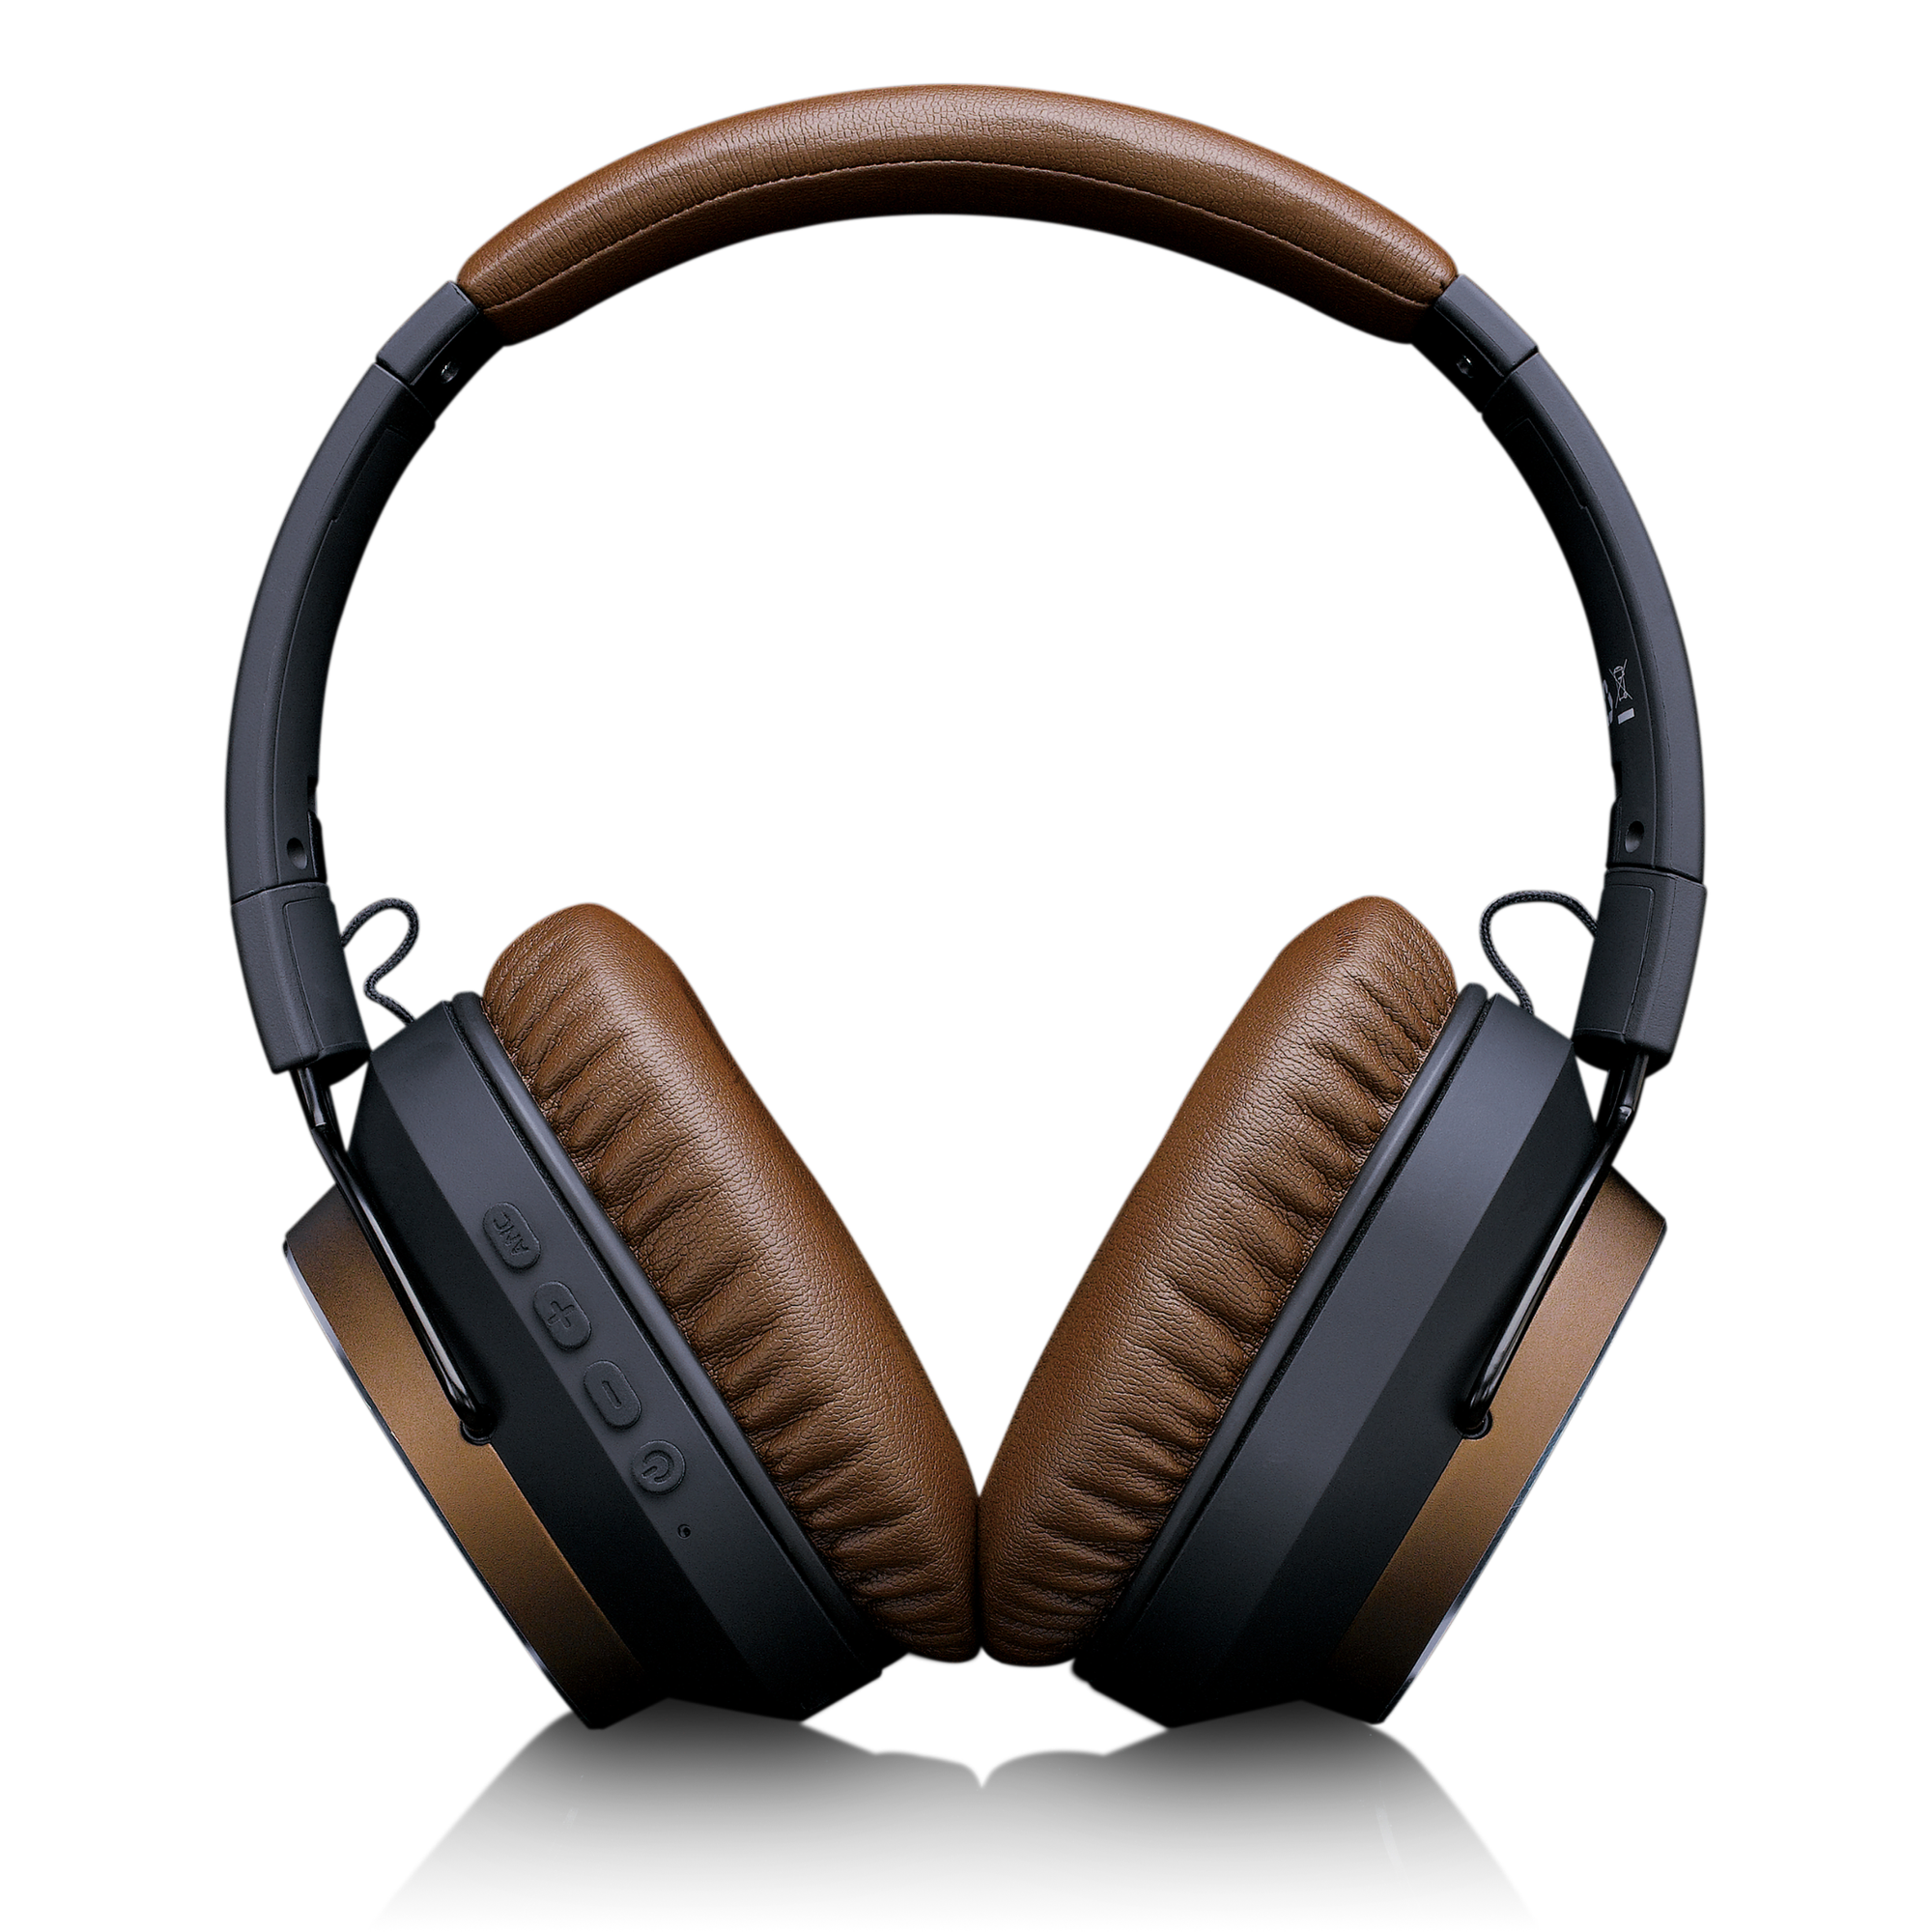 - Cancelling Bluetooth (ANC) Braun-Schwarz Over-ear Noise LENCO Active Headphone Bluetooth -, HPB-730BN